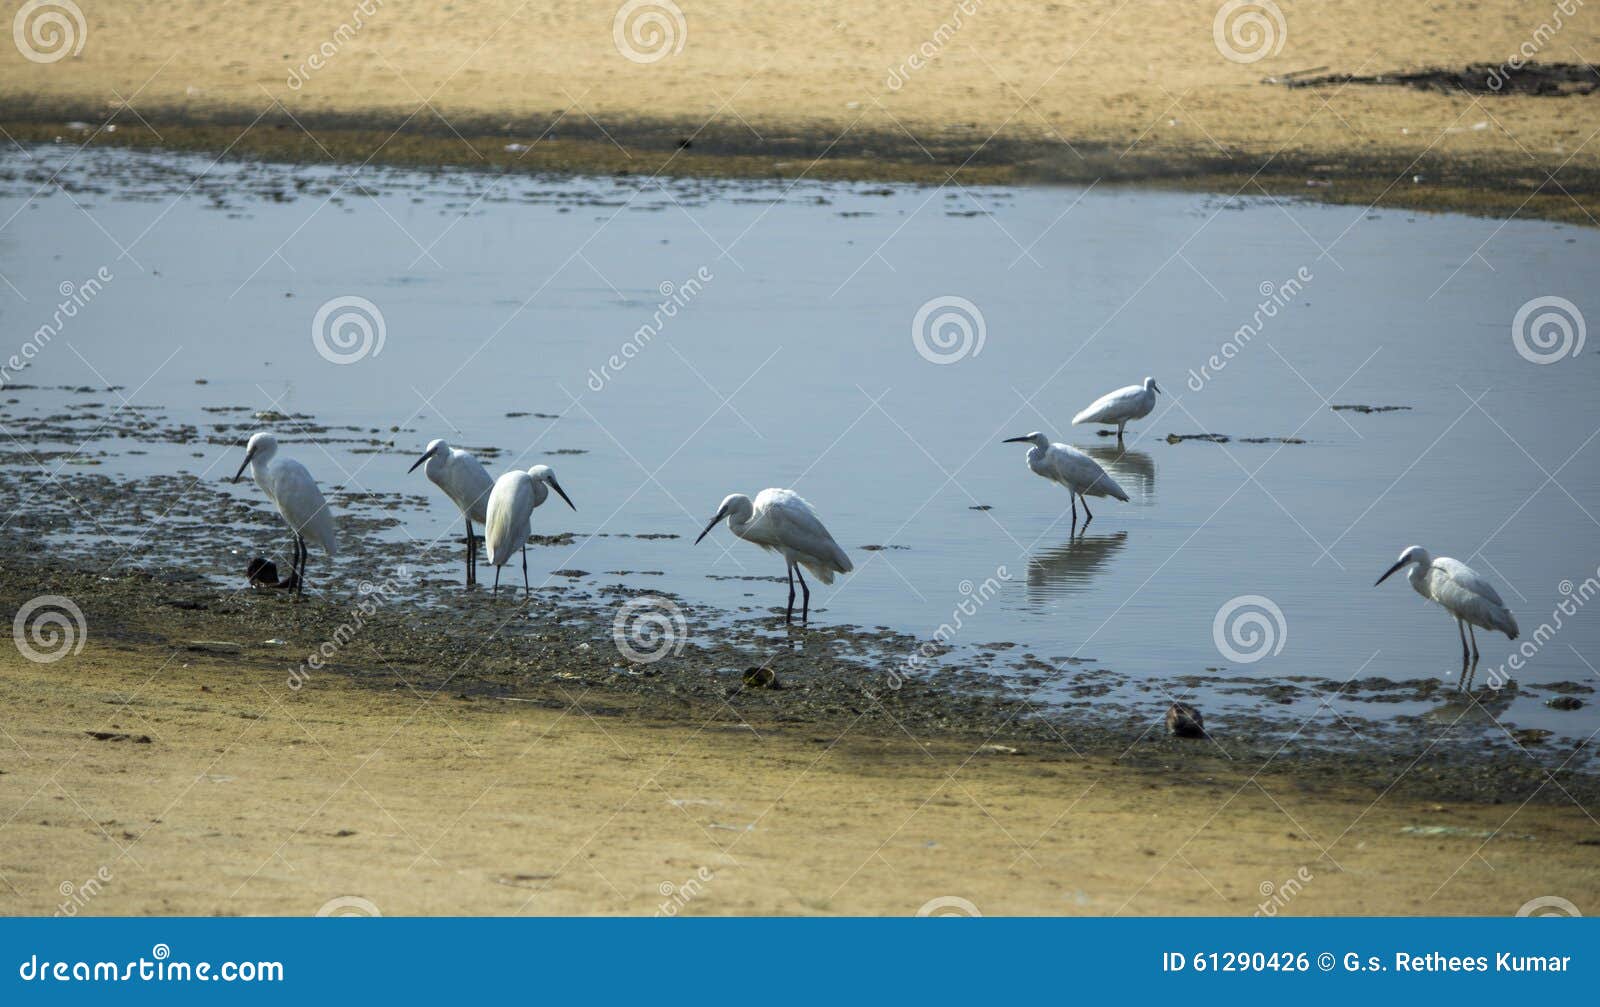 Group of Herons. Group of white herons fishing in lake water